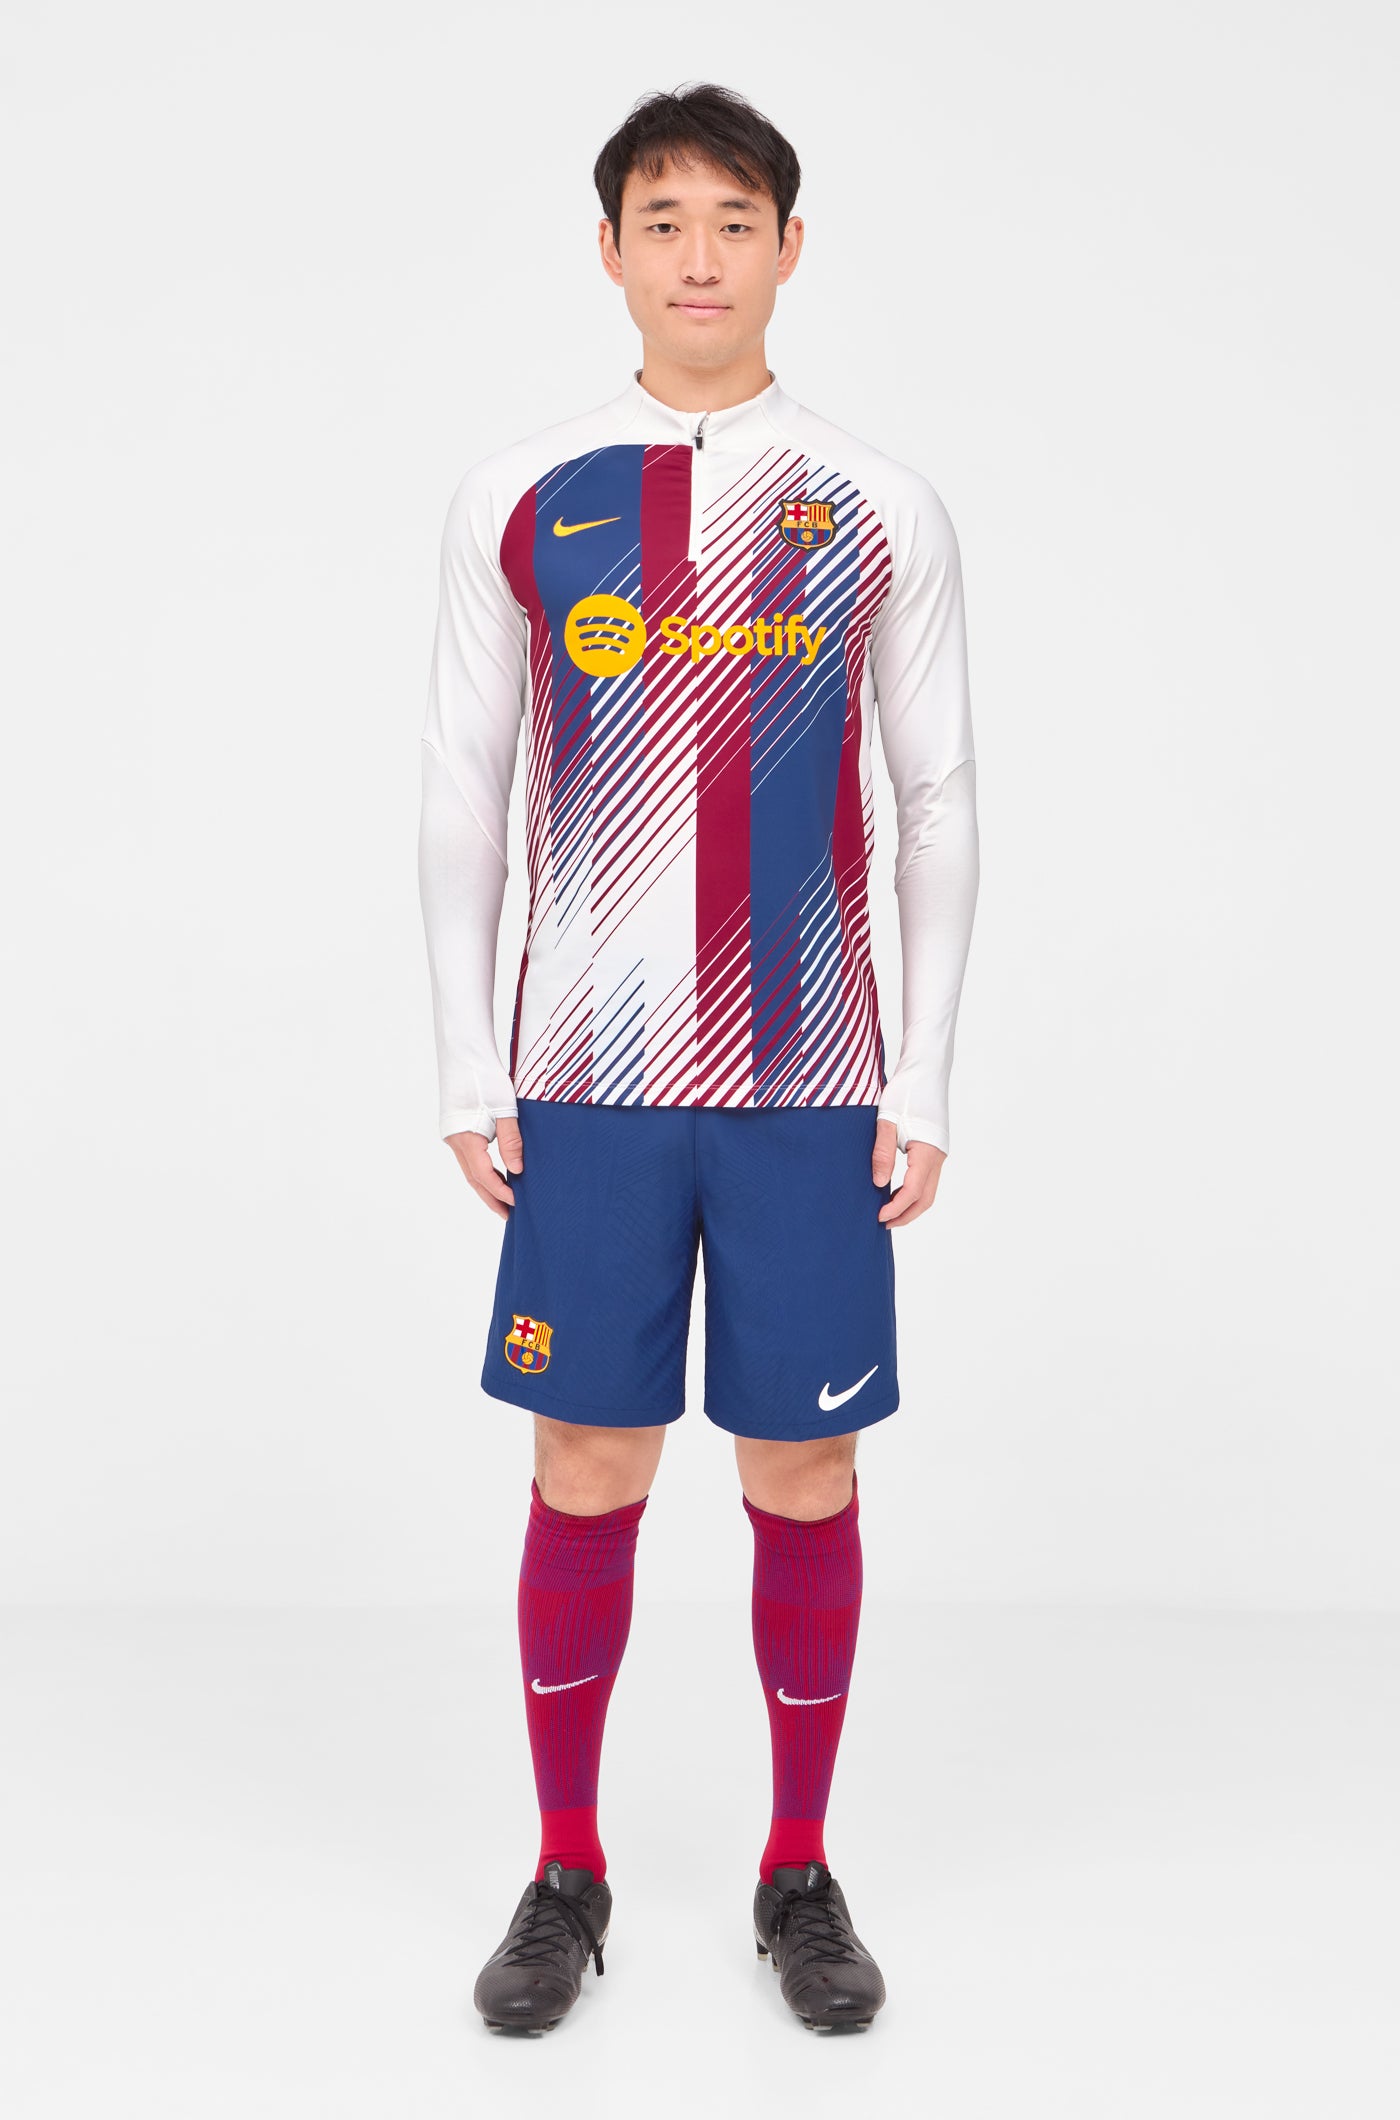 FC Barcelona Pre-Match sweatshirt Shirt 23/24 – La Liga